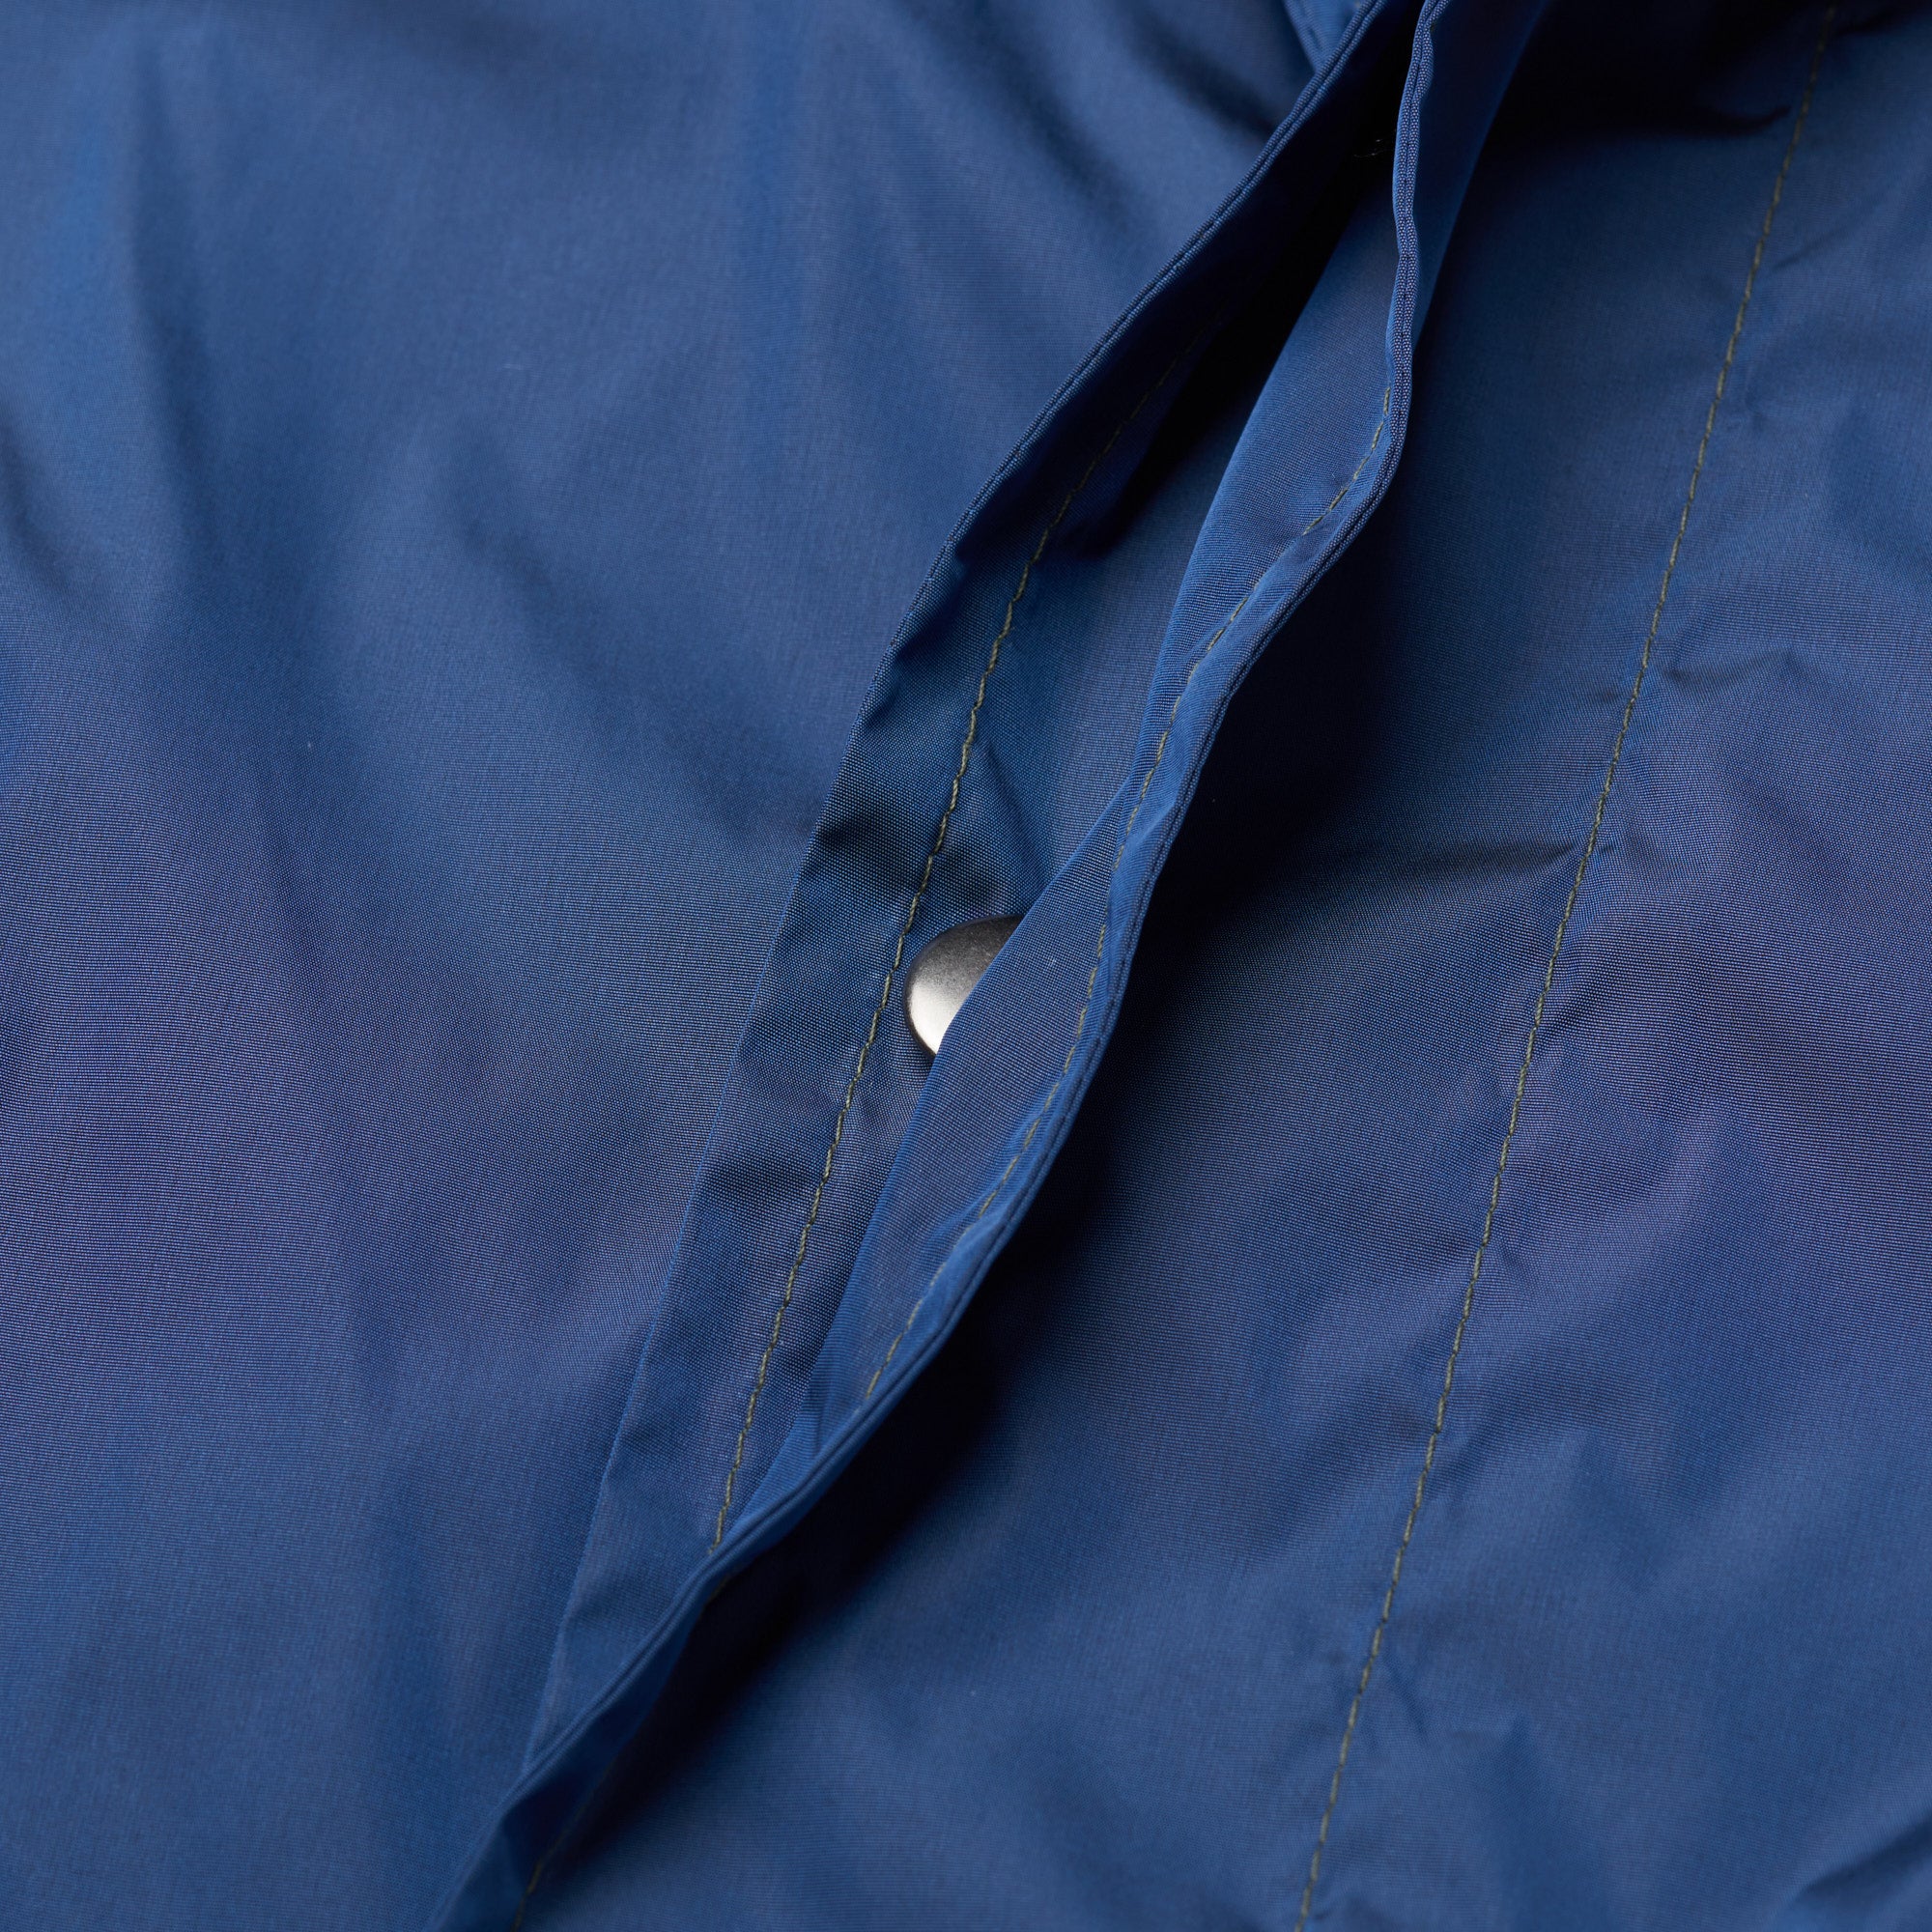 BOGLIOLI Milano "Wear" Navy Blue Unlined Lightweight Rain Coat EU 52 NEW US 42 BOGLIOLI